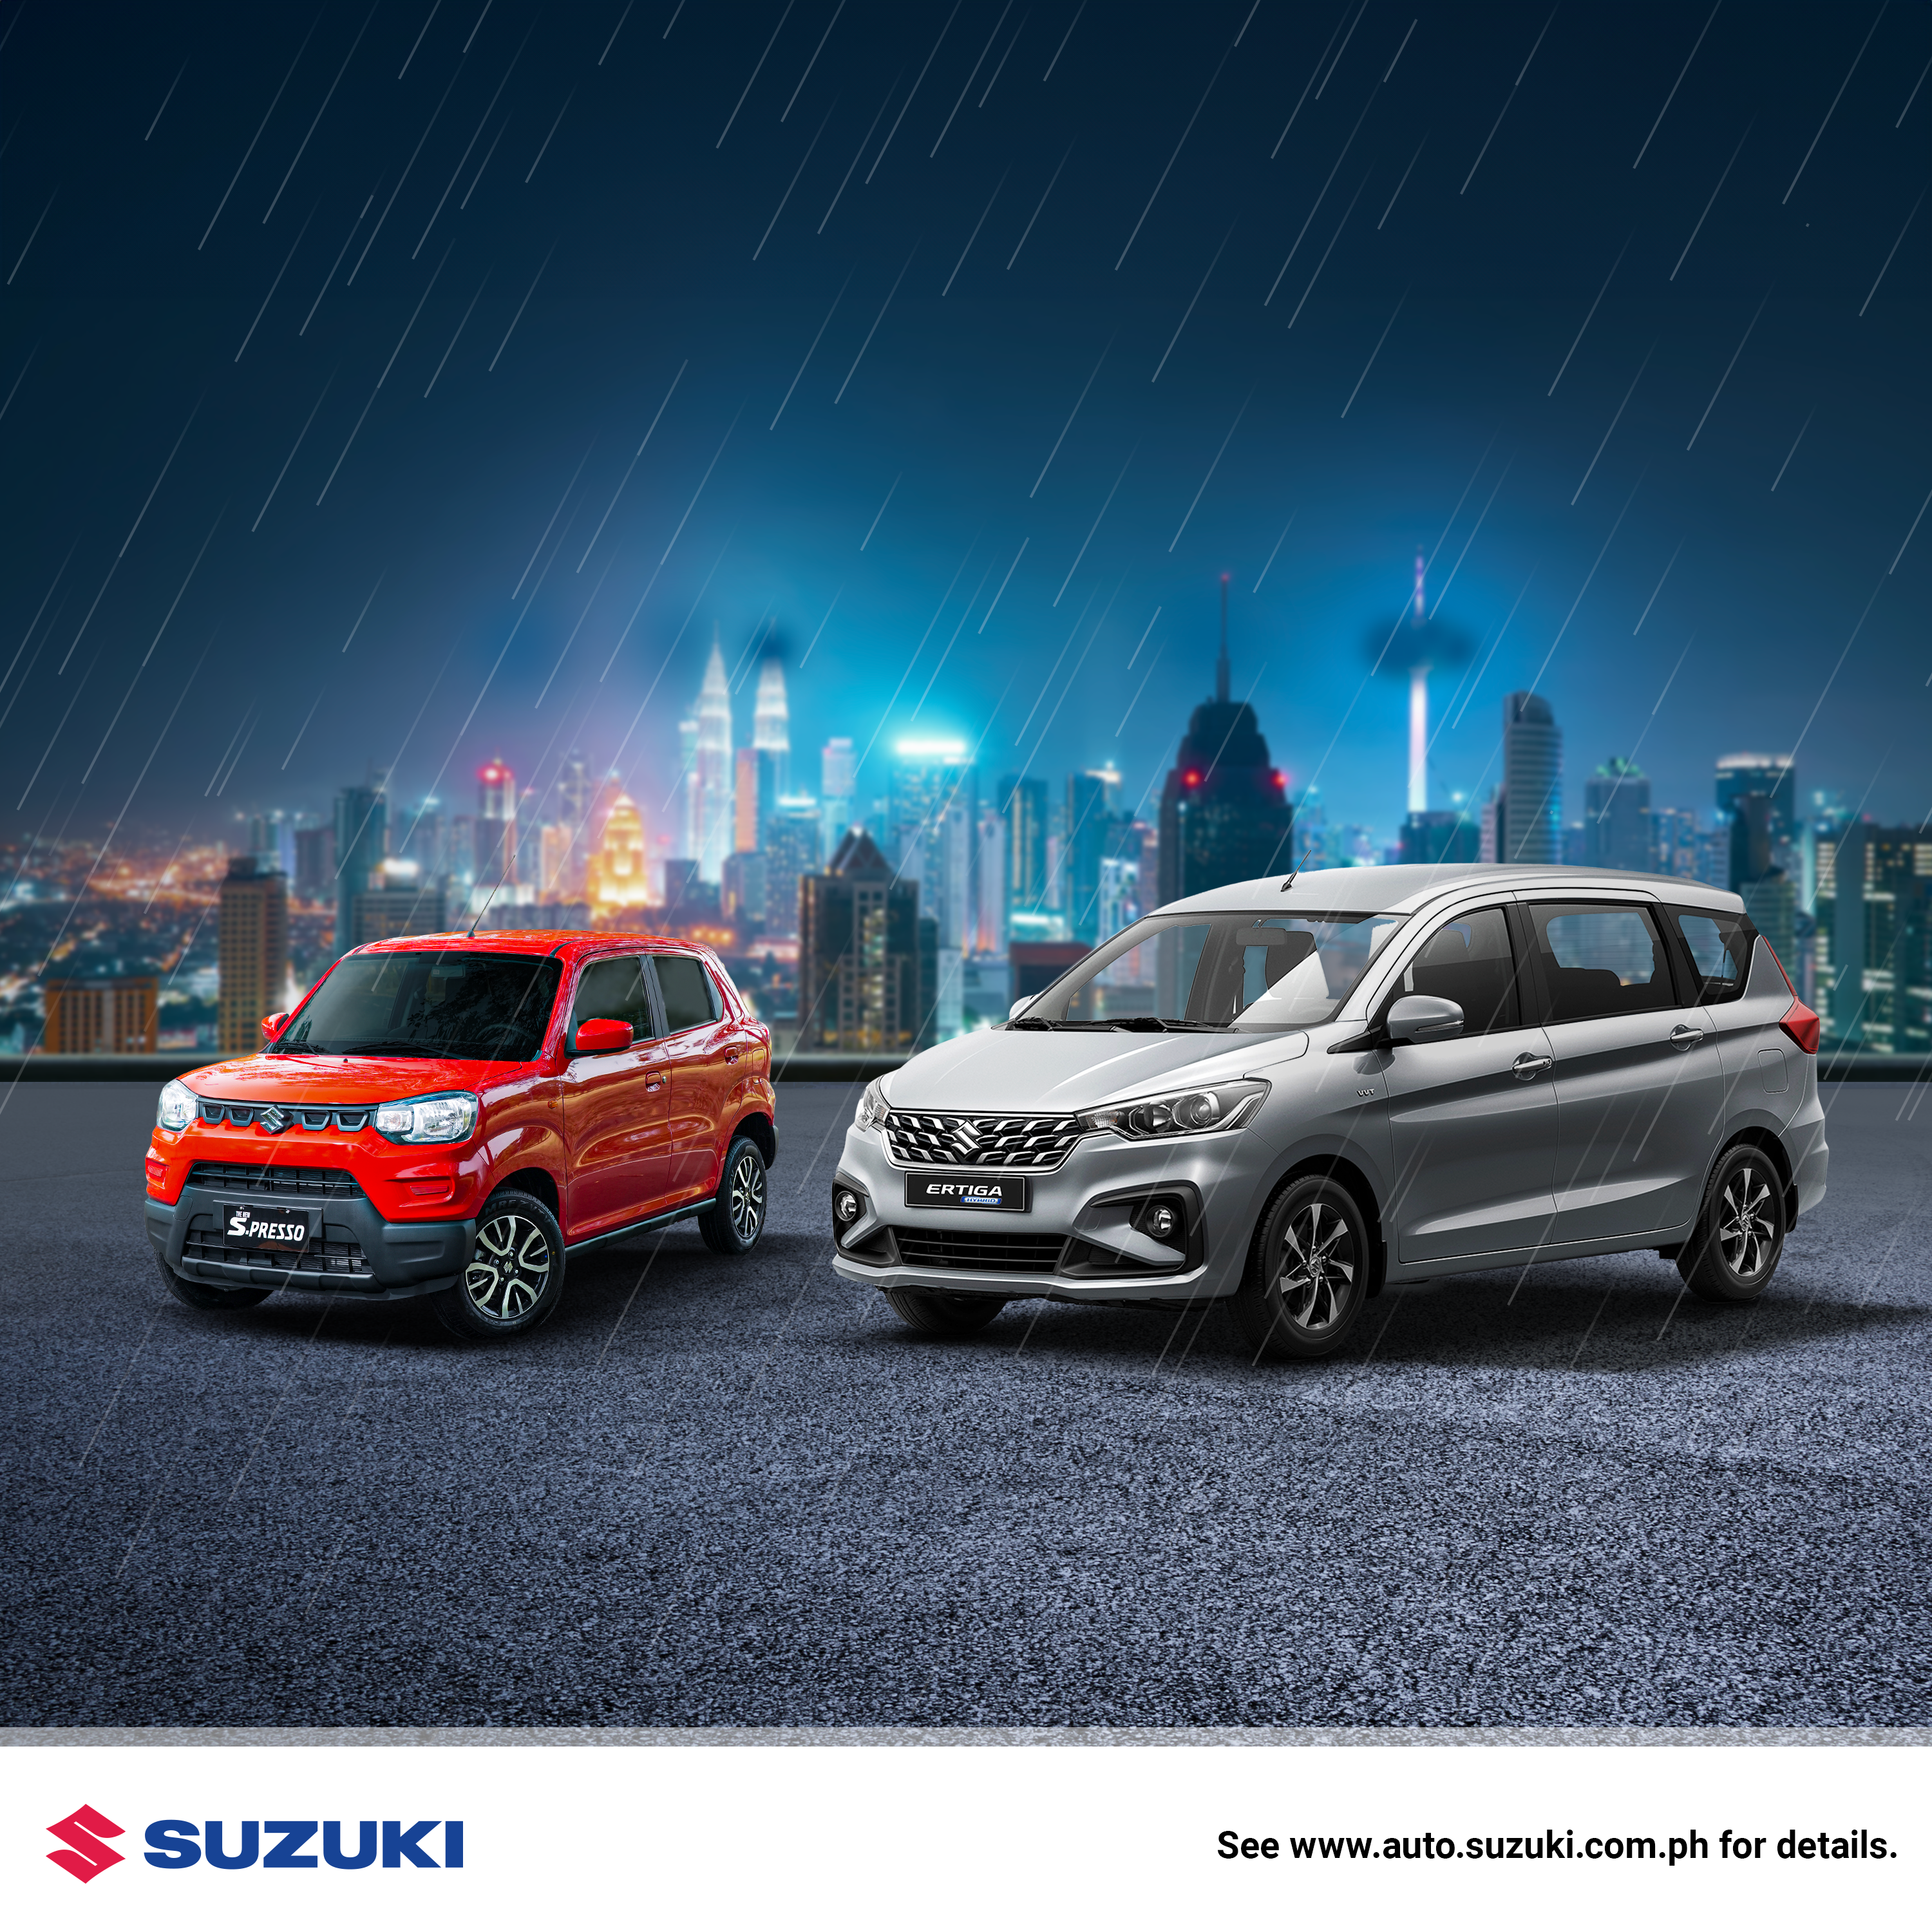 July Just Got Better: Suzuki Philippines Extends Popular ‘Rainy Deals’ Promo